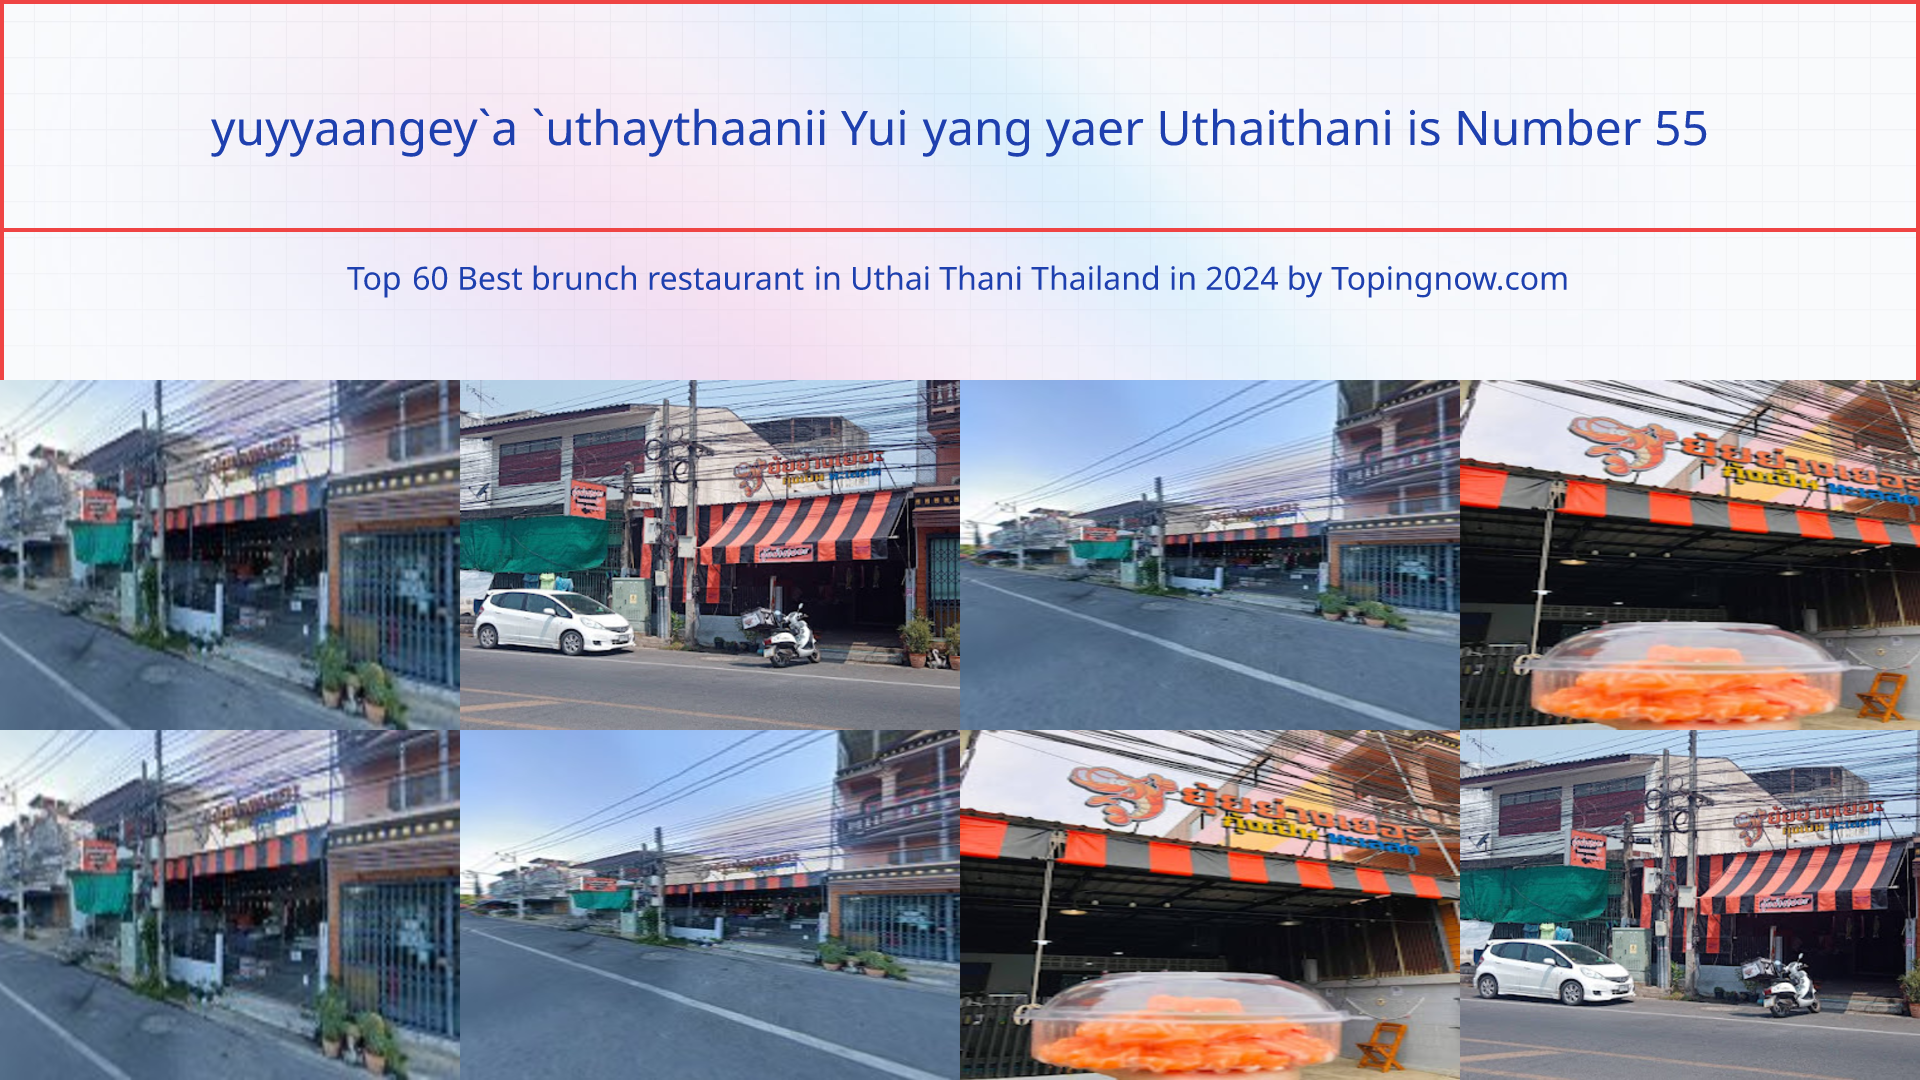 yuyyaangey`a `uthaythaanii Yui yang yaer Uthaithani: Top 60 Best brunch restaurant in Uthai Thani Thailand in 2024